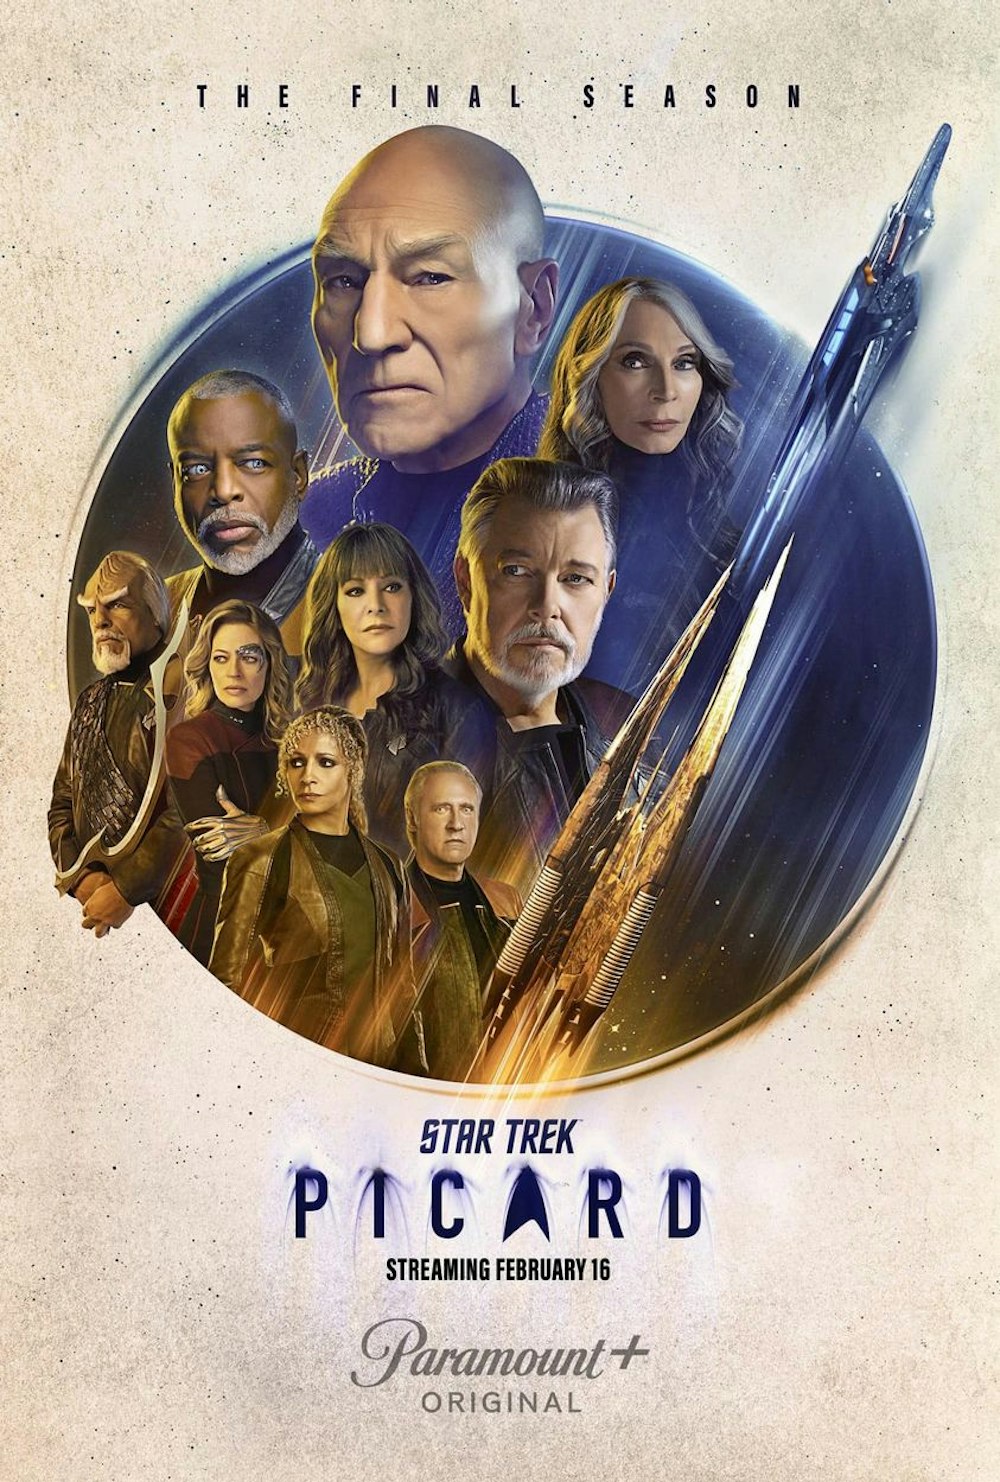 Alex Kurtzman And Patrick Stewart Suggest ‘Star Trek: Picard’ Might Continue Beyond Season 3